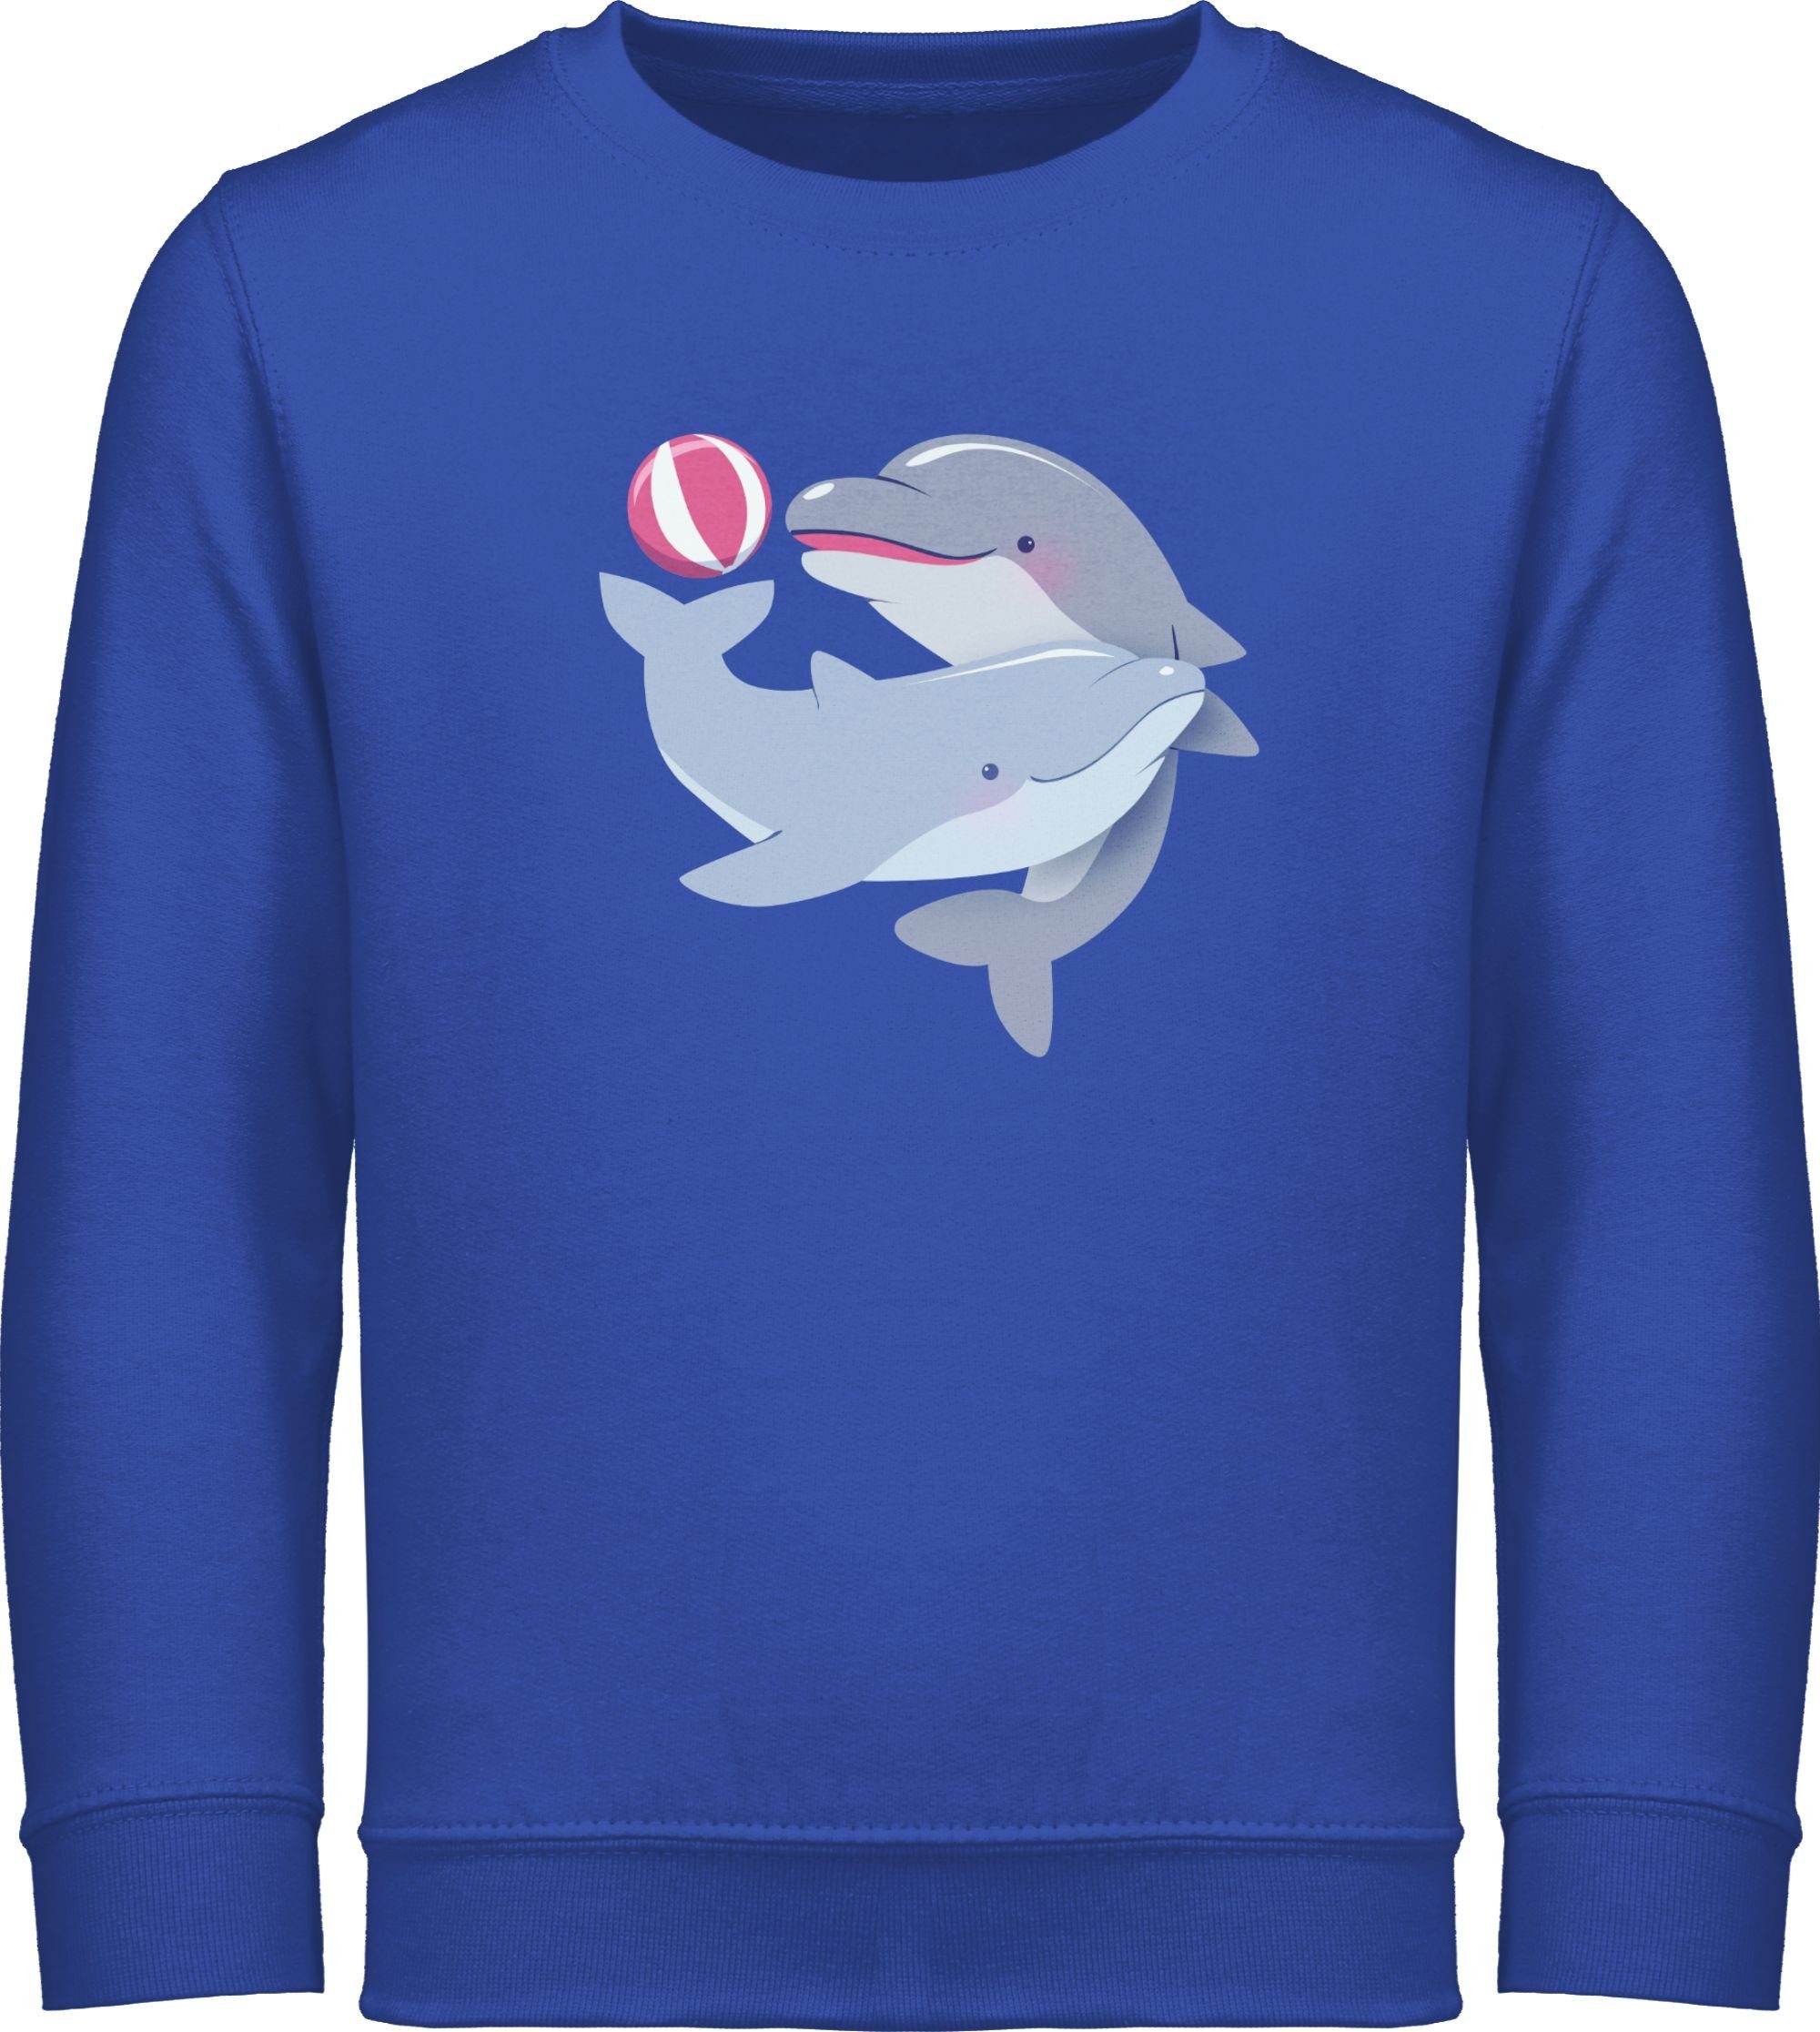 Shirtracer Sweatshirt Delfine Delfin Dolphin Tiermotiv Animal Print